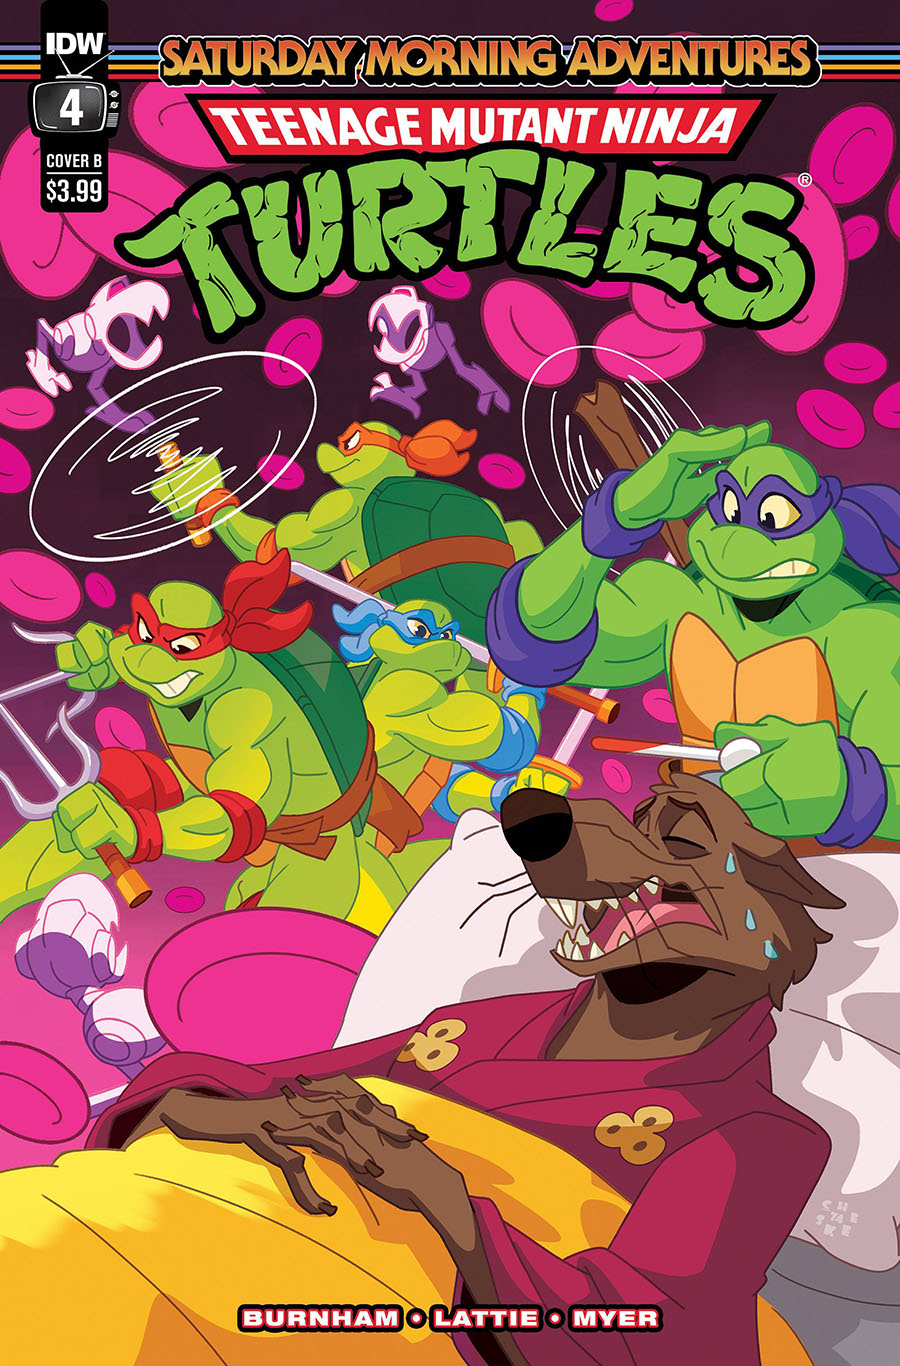 Teenage Mutant Ninja Turtles Saturday Morning Adventures #4 Cover B Variant Sean Galloway Cover